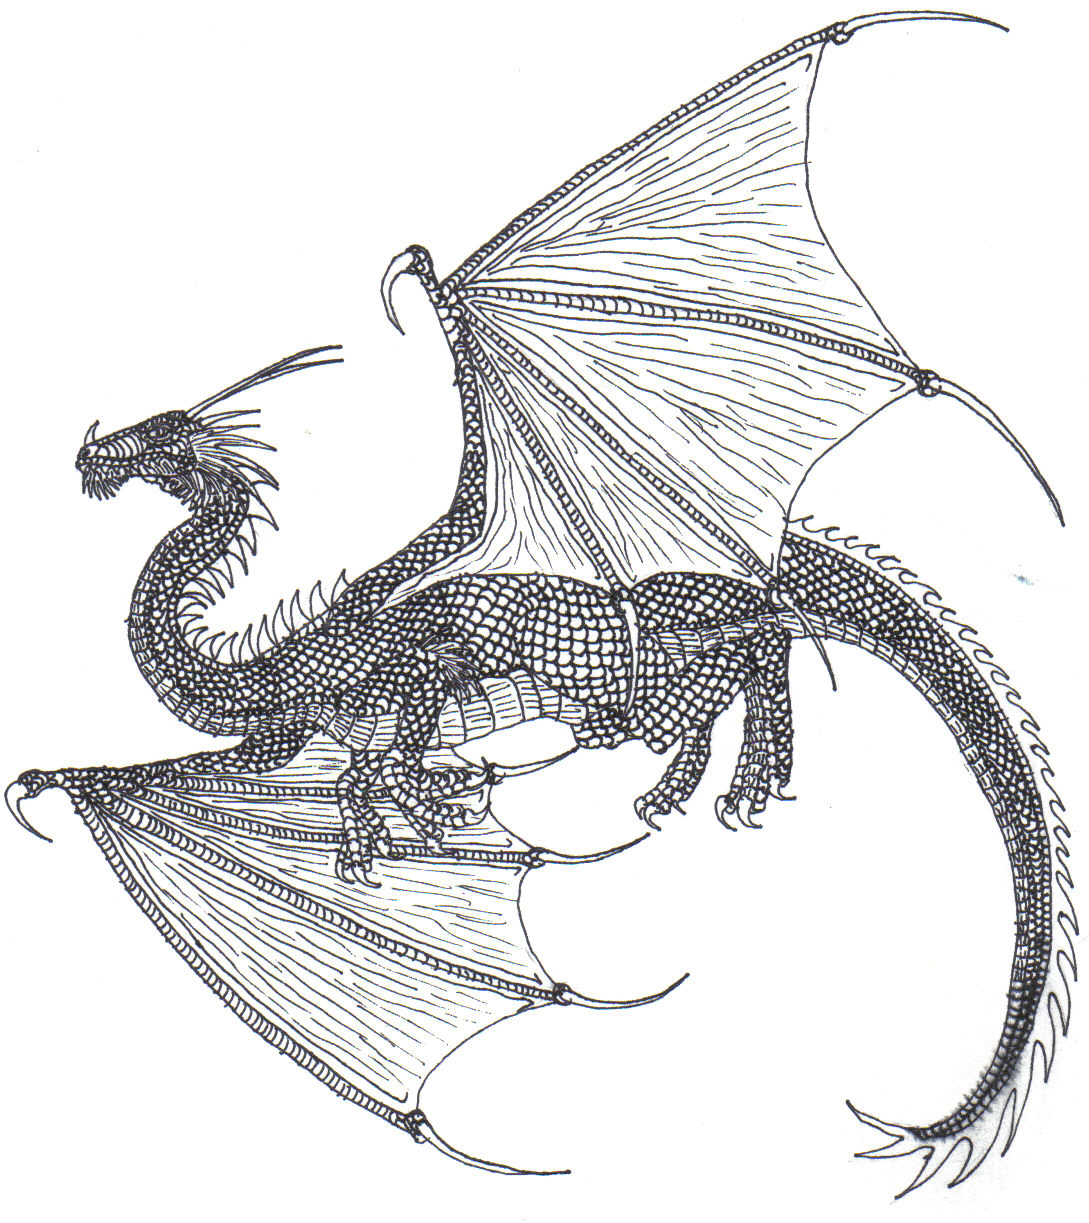 Flying Dragon by Darkwing